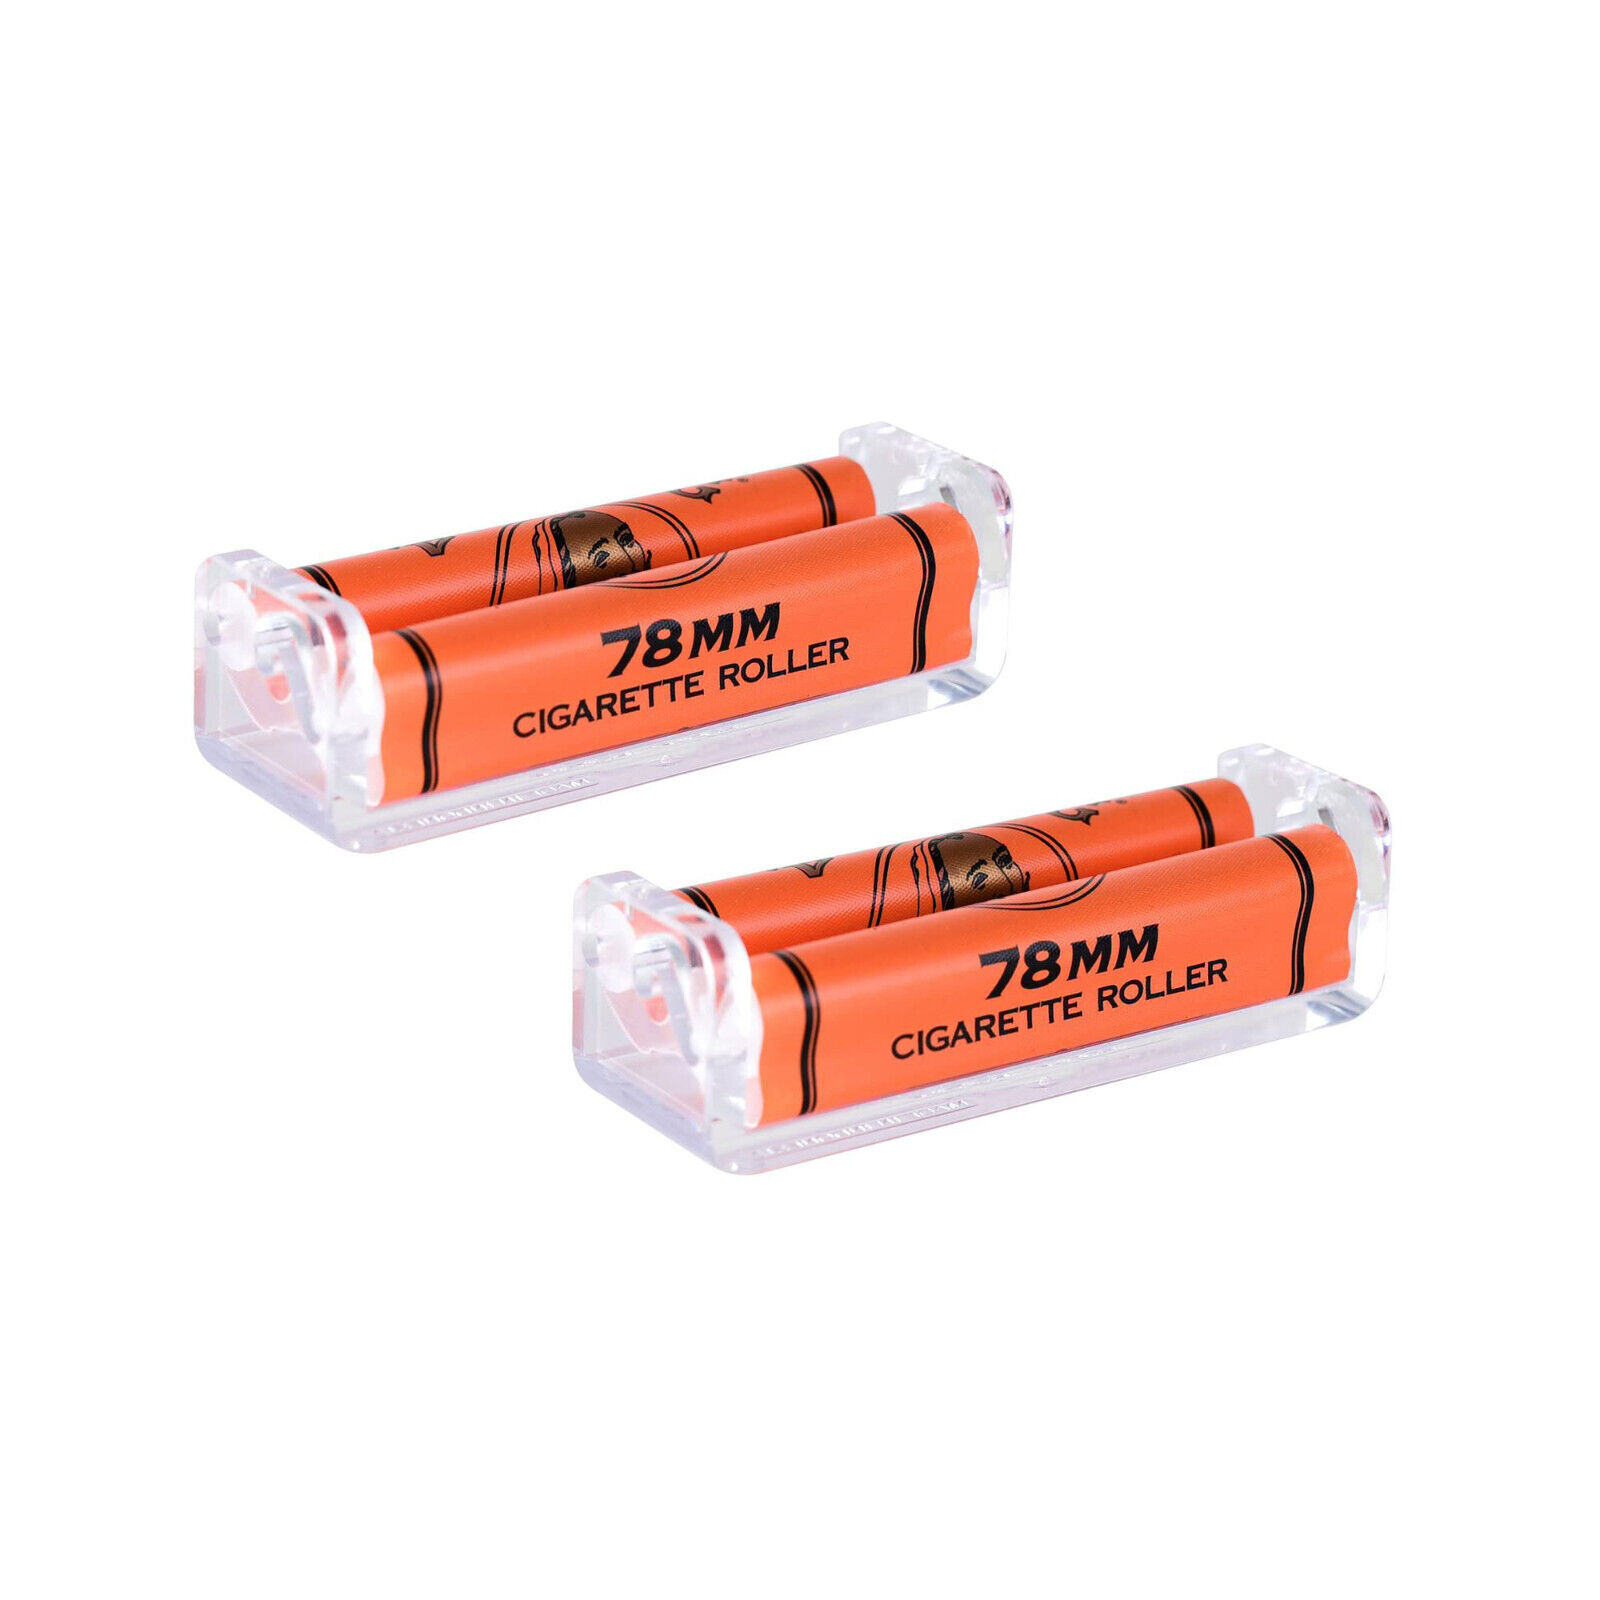 2pk Zig Zag Roller Machine 78mm for 1 1/4 Rolling Papers Orange - 